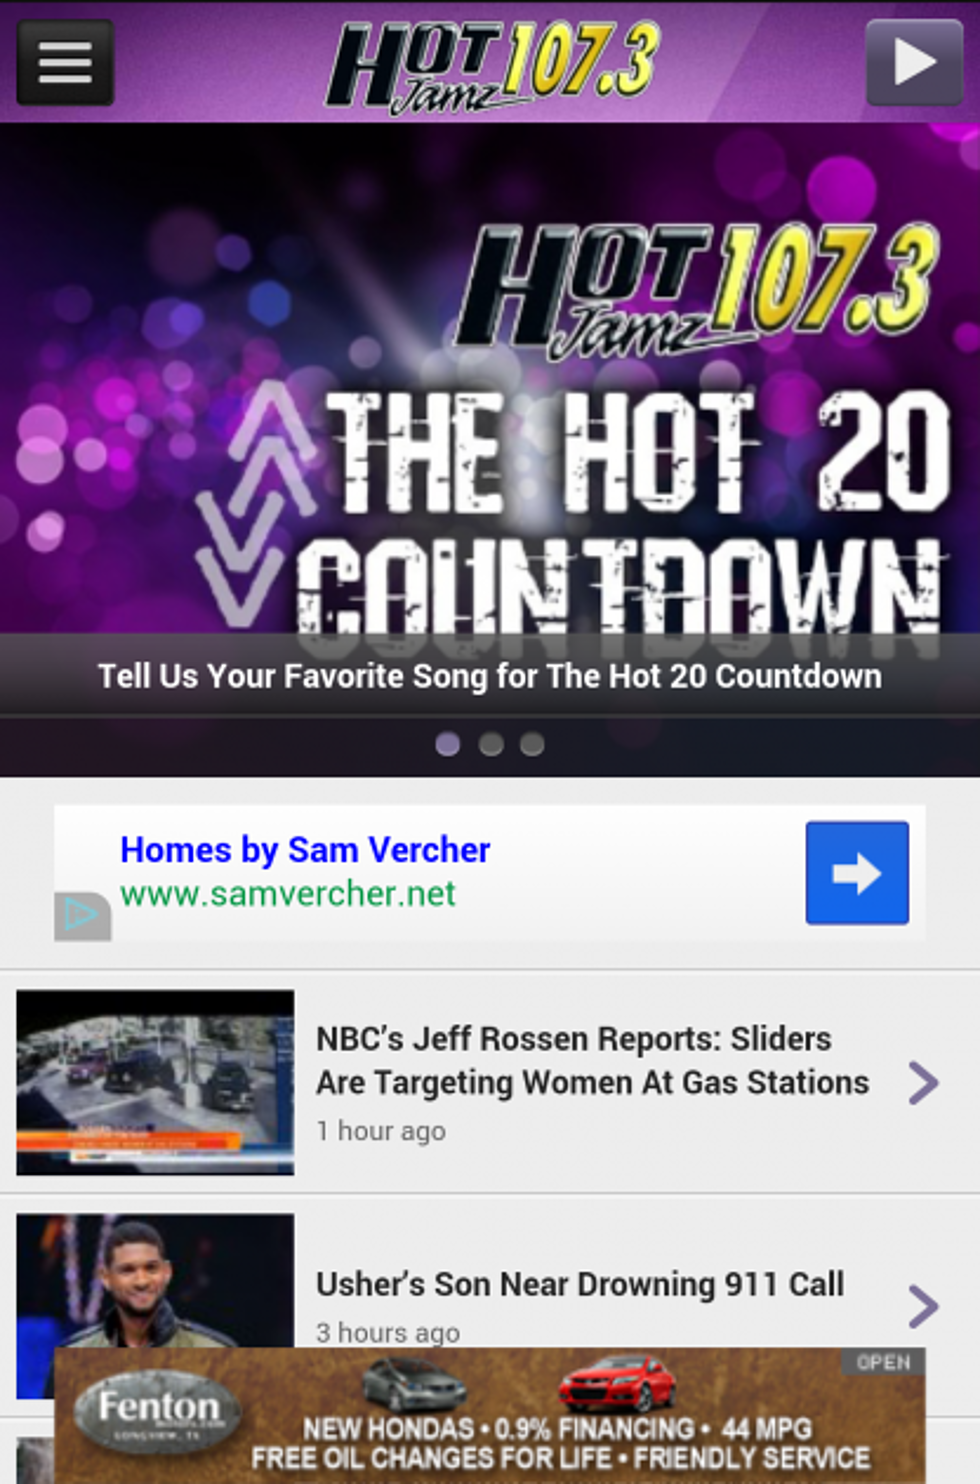 Hot1073Jamz.com Unveils New User-Friendly Mobile Site